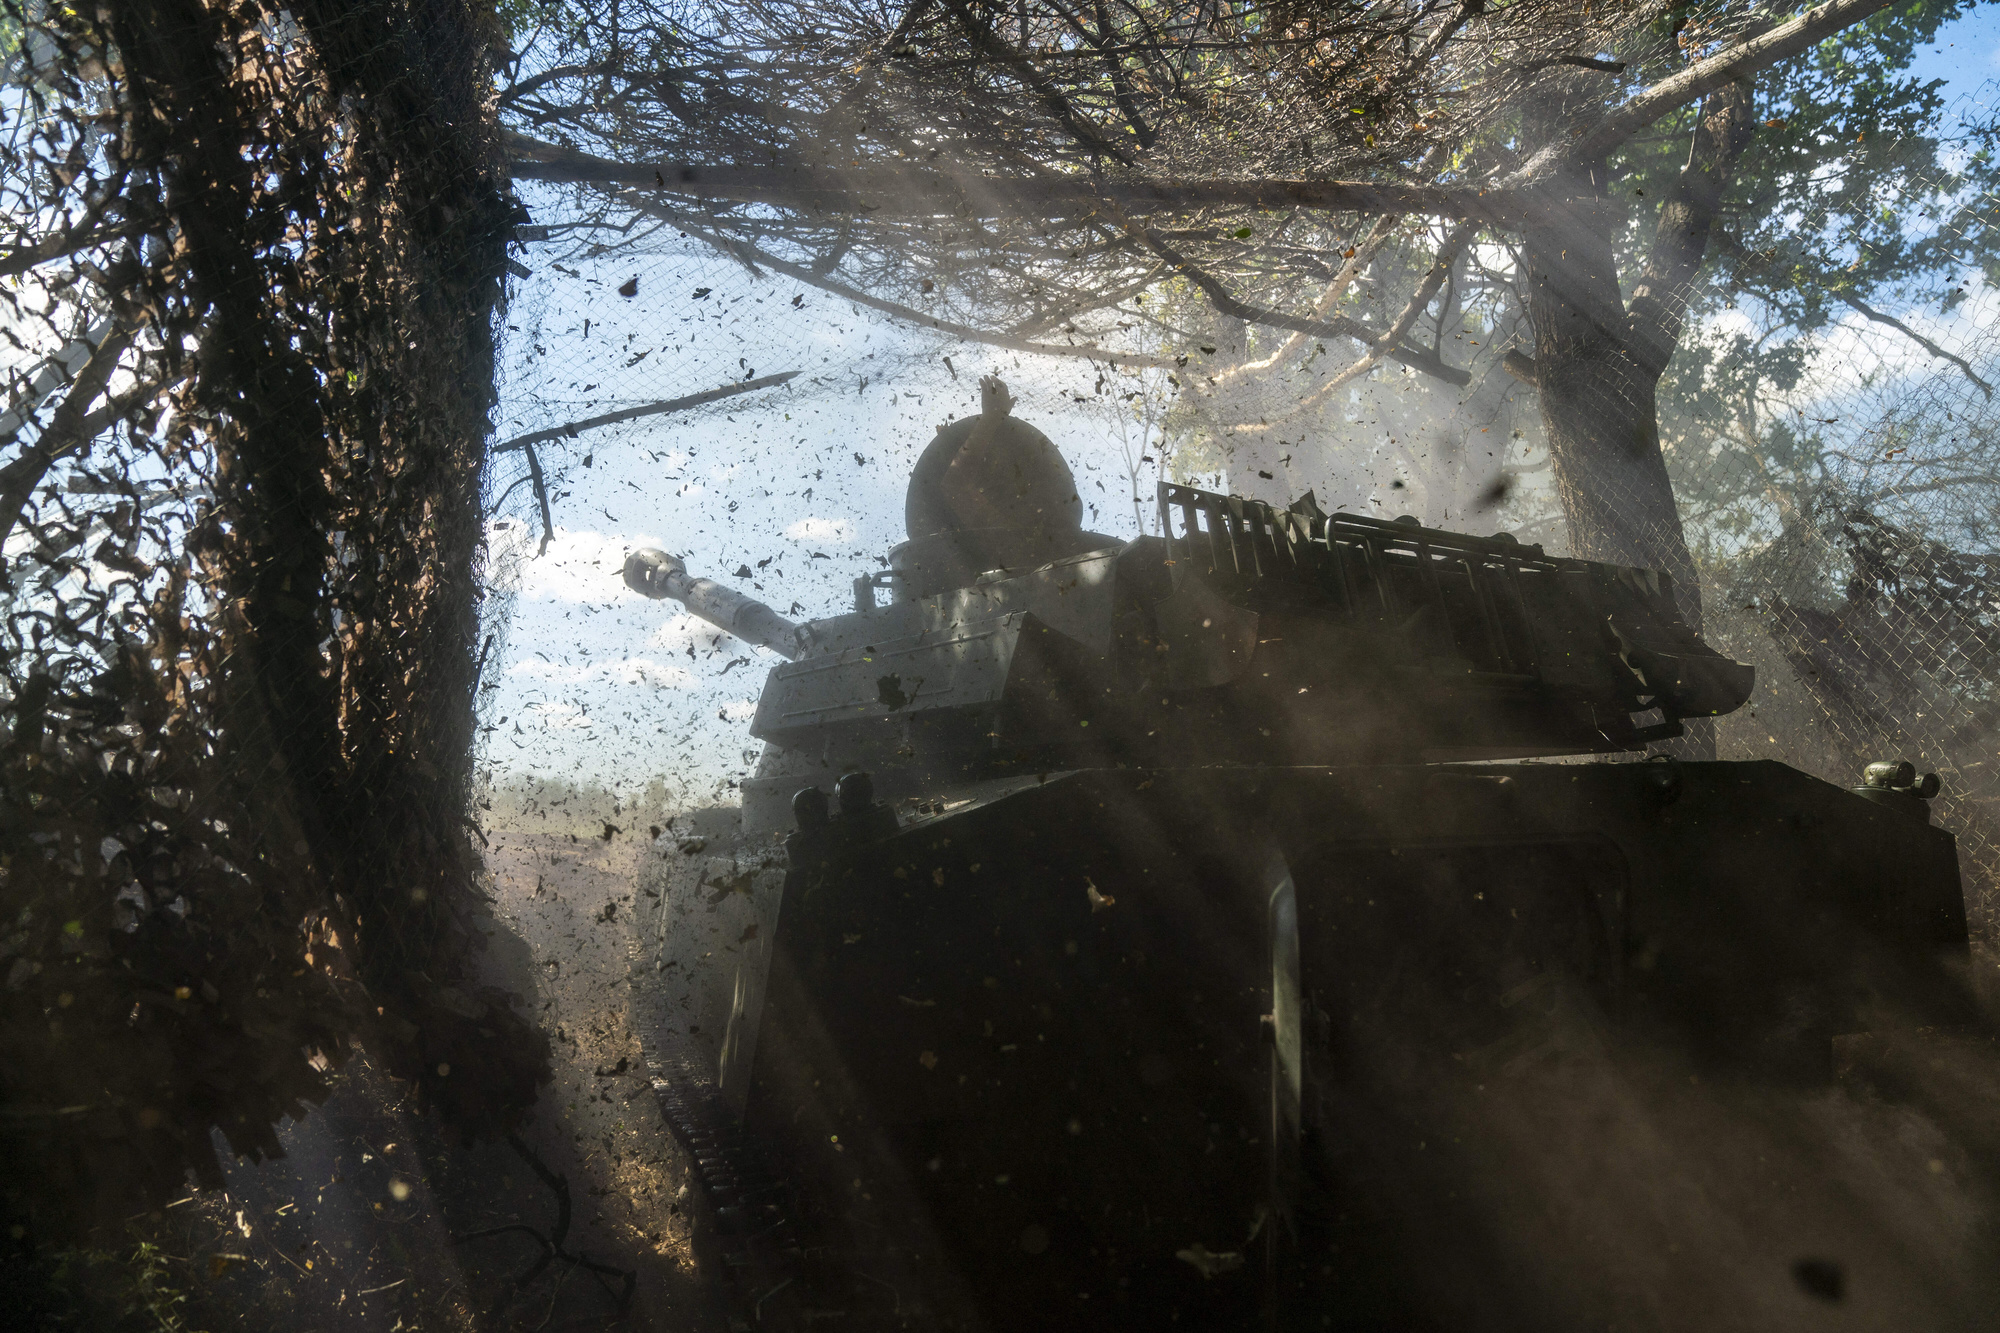 Ukrainian forces at the front, illustrative image. Photo via Eastnews.ua.